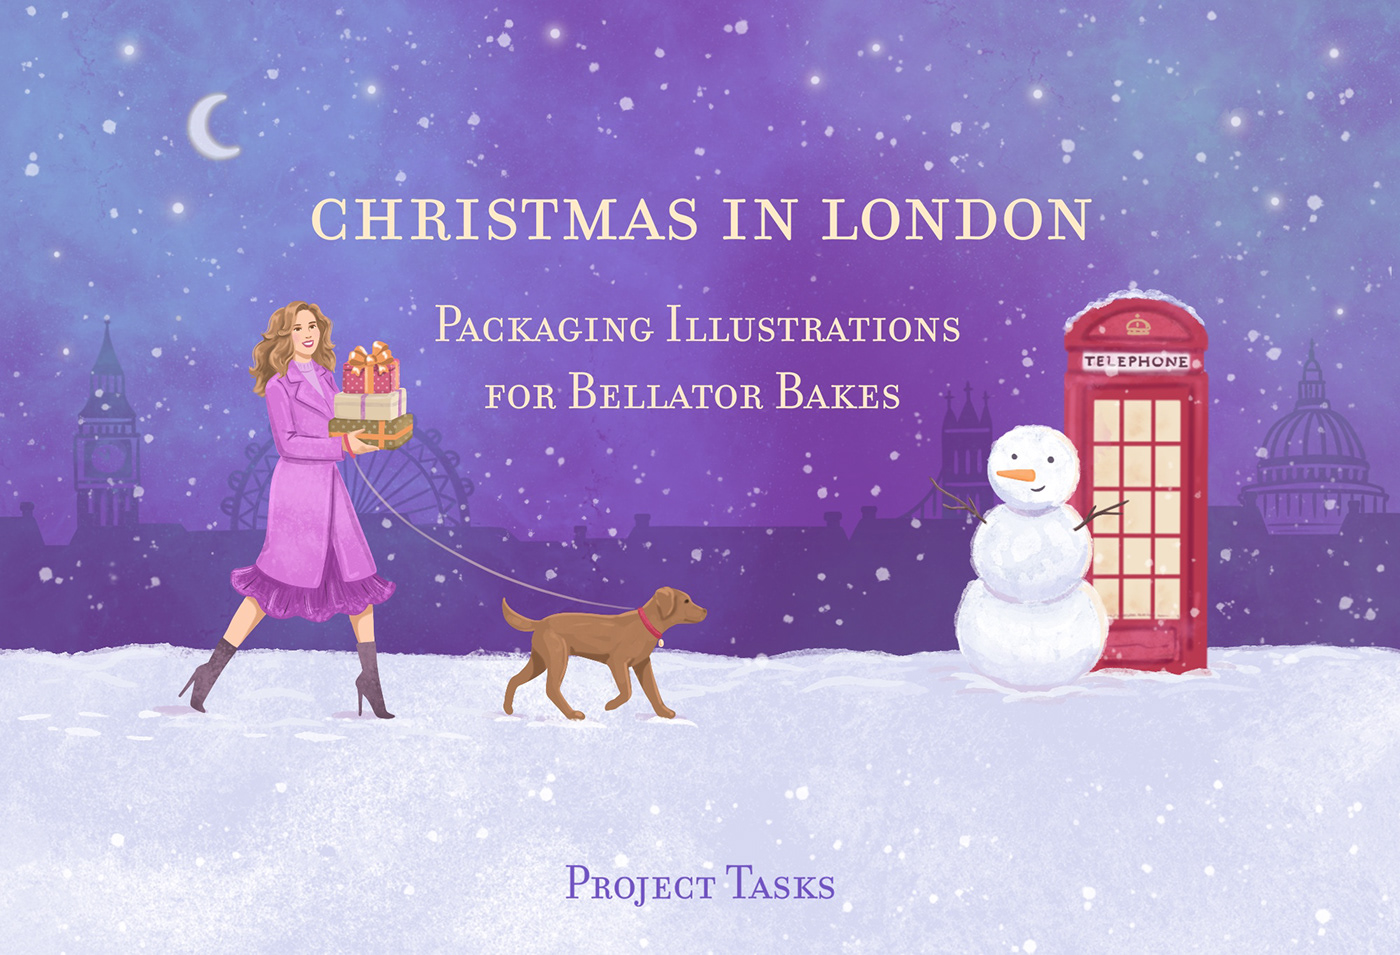 Christmas packaging illustration of London, United Kingdom, Britain
For bakery restaurant